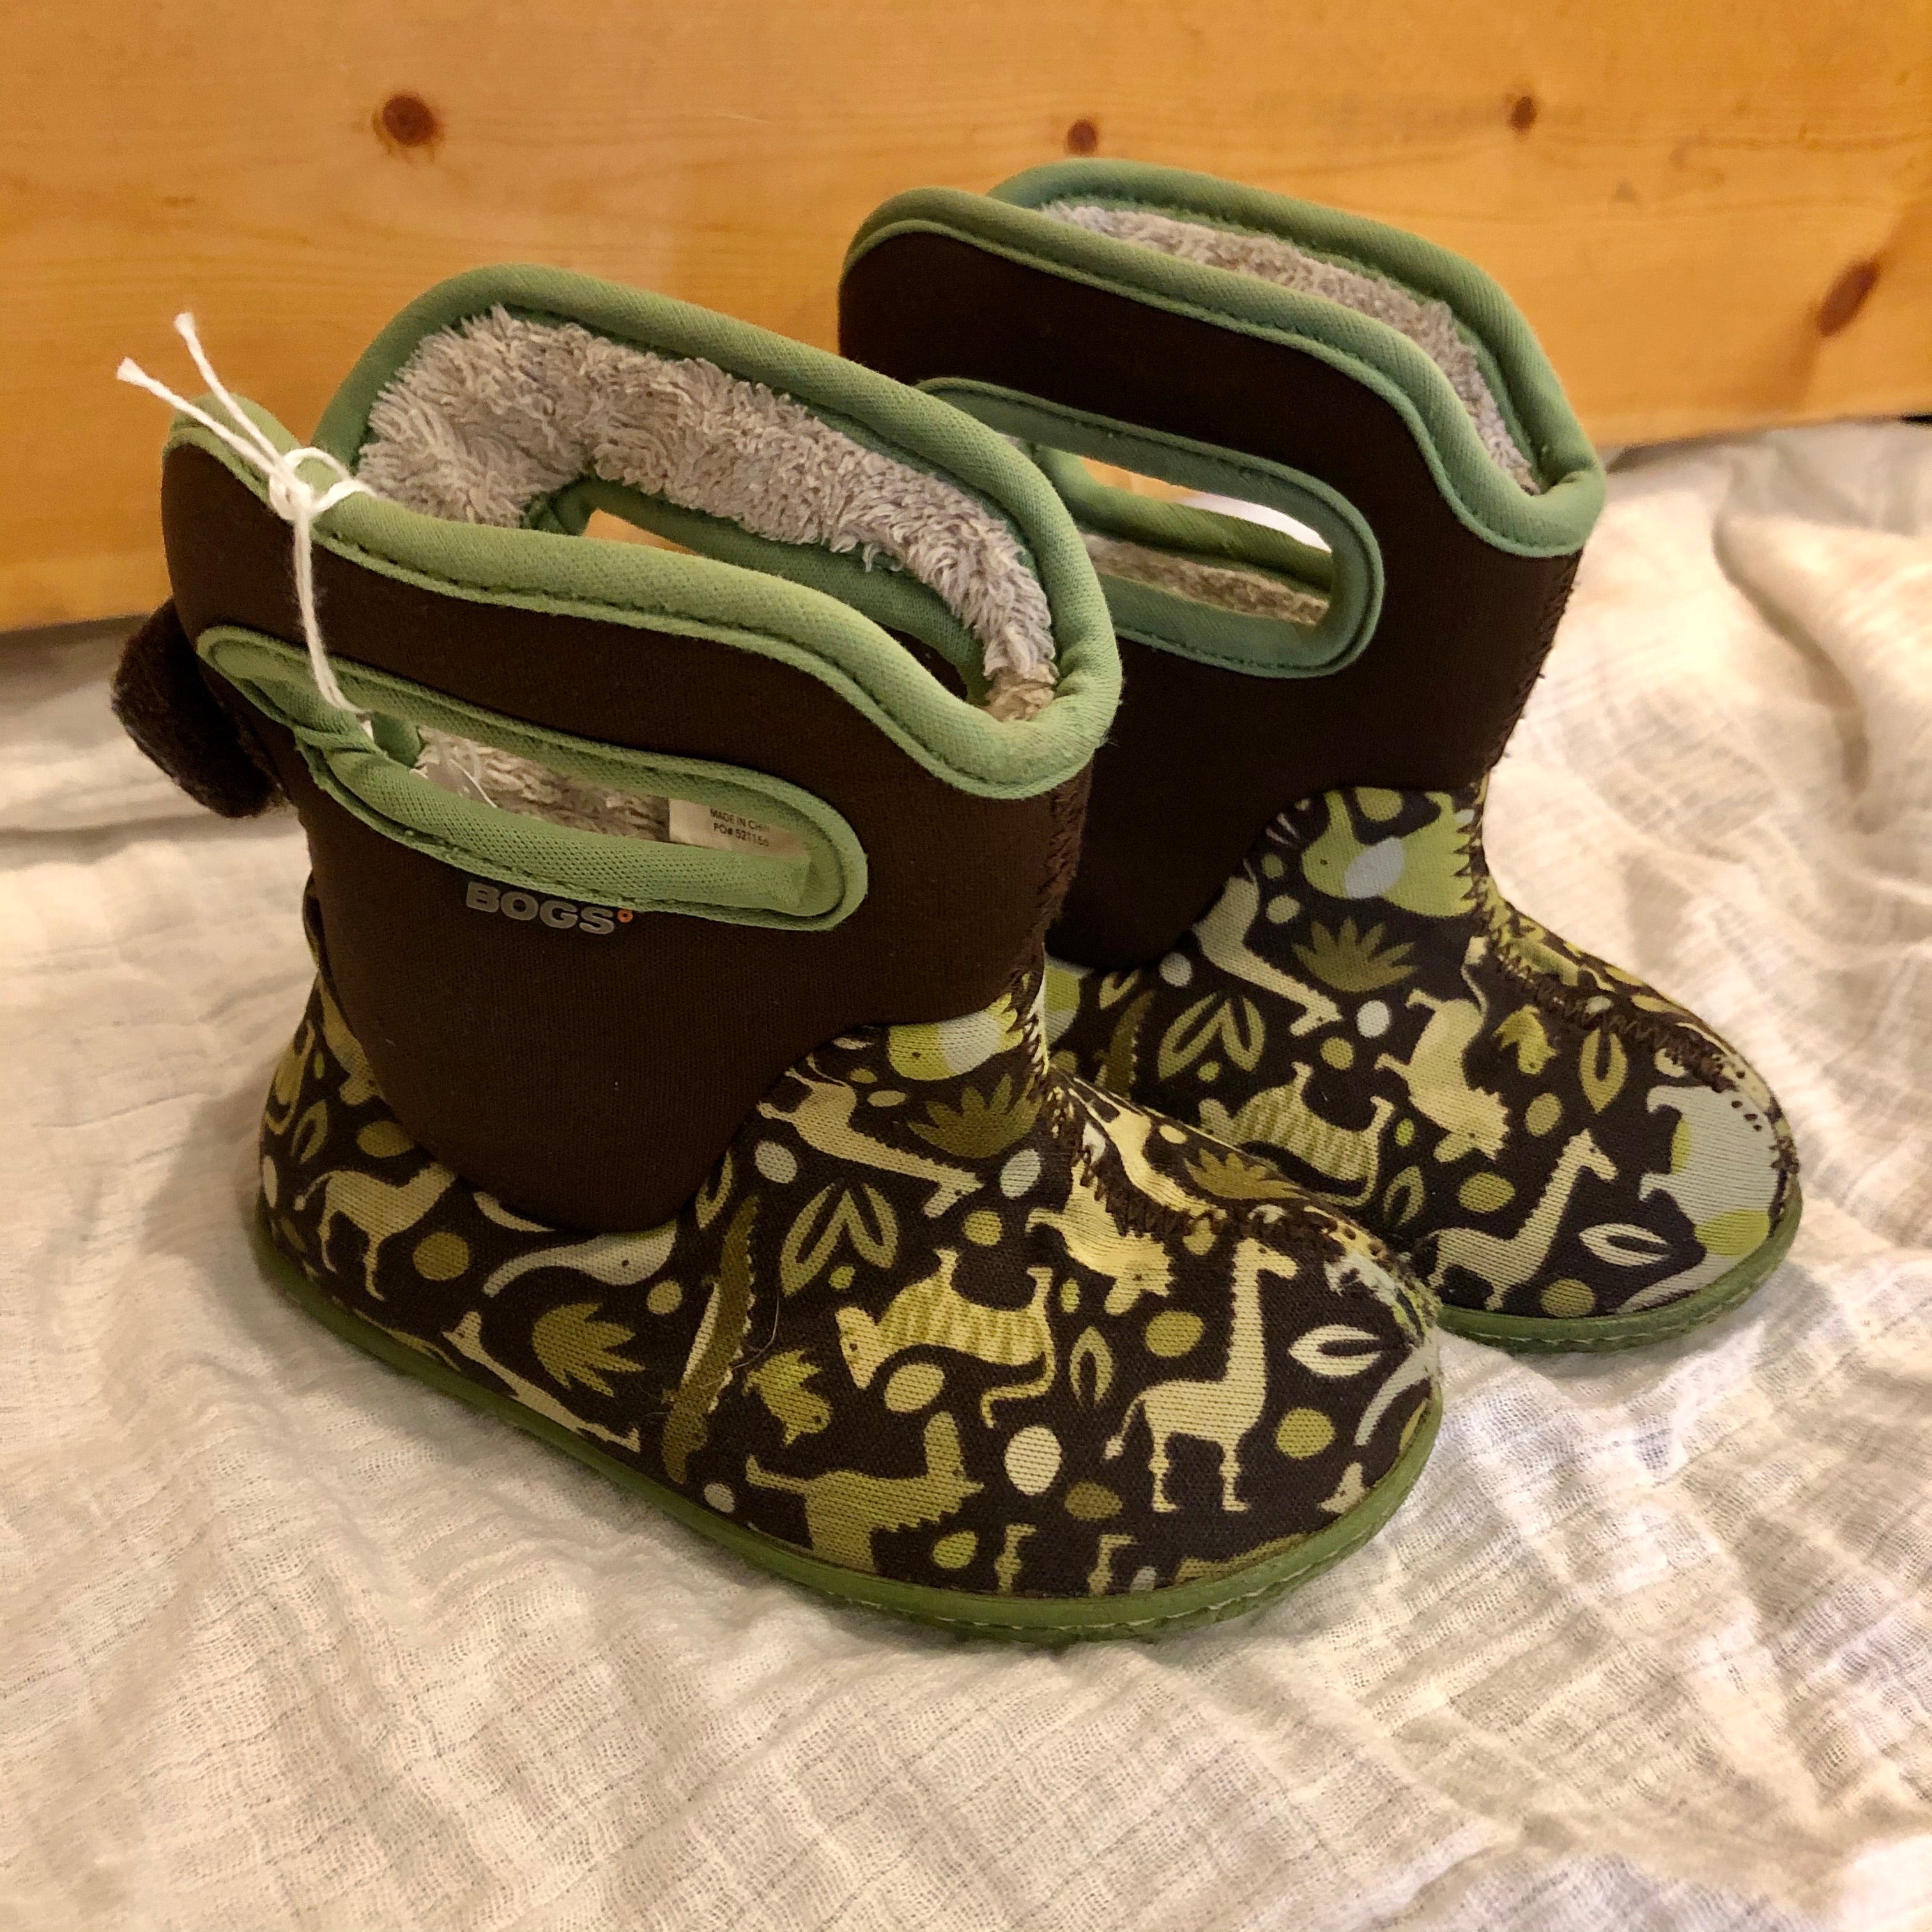 Size 7 Toddler Green Bog Boots